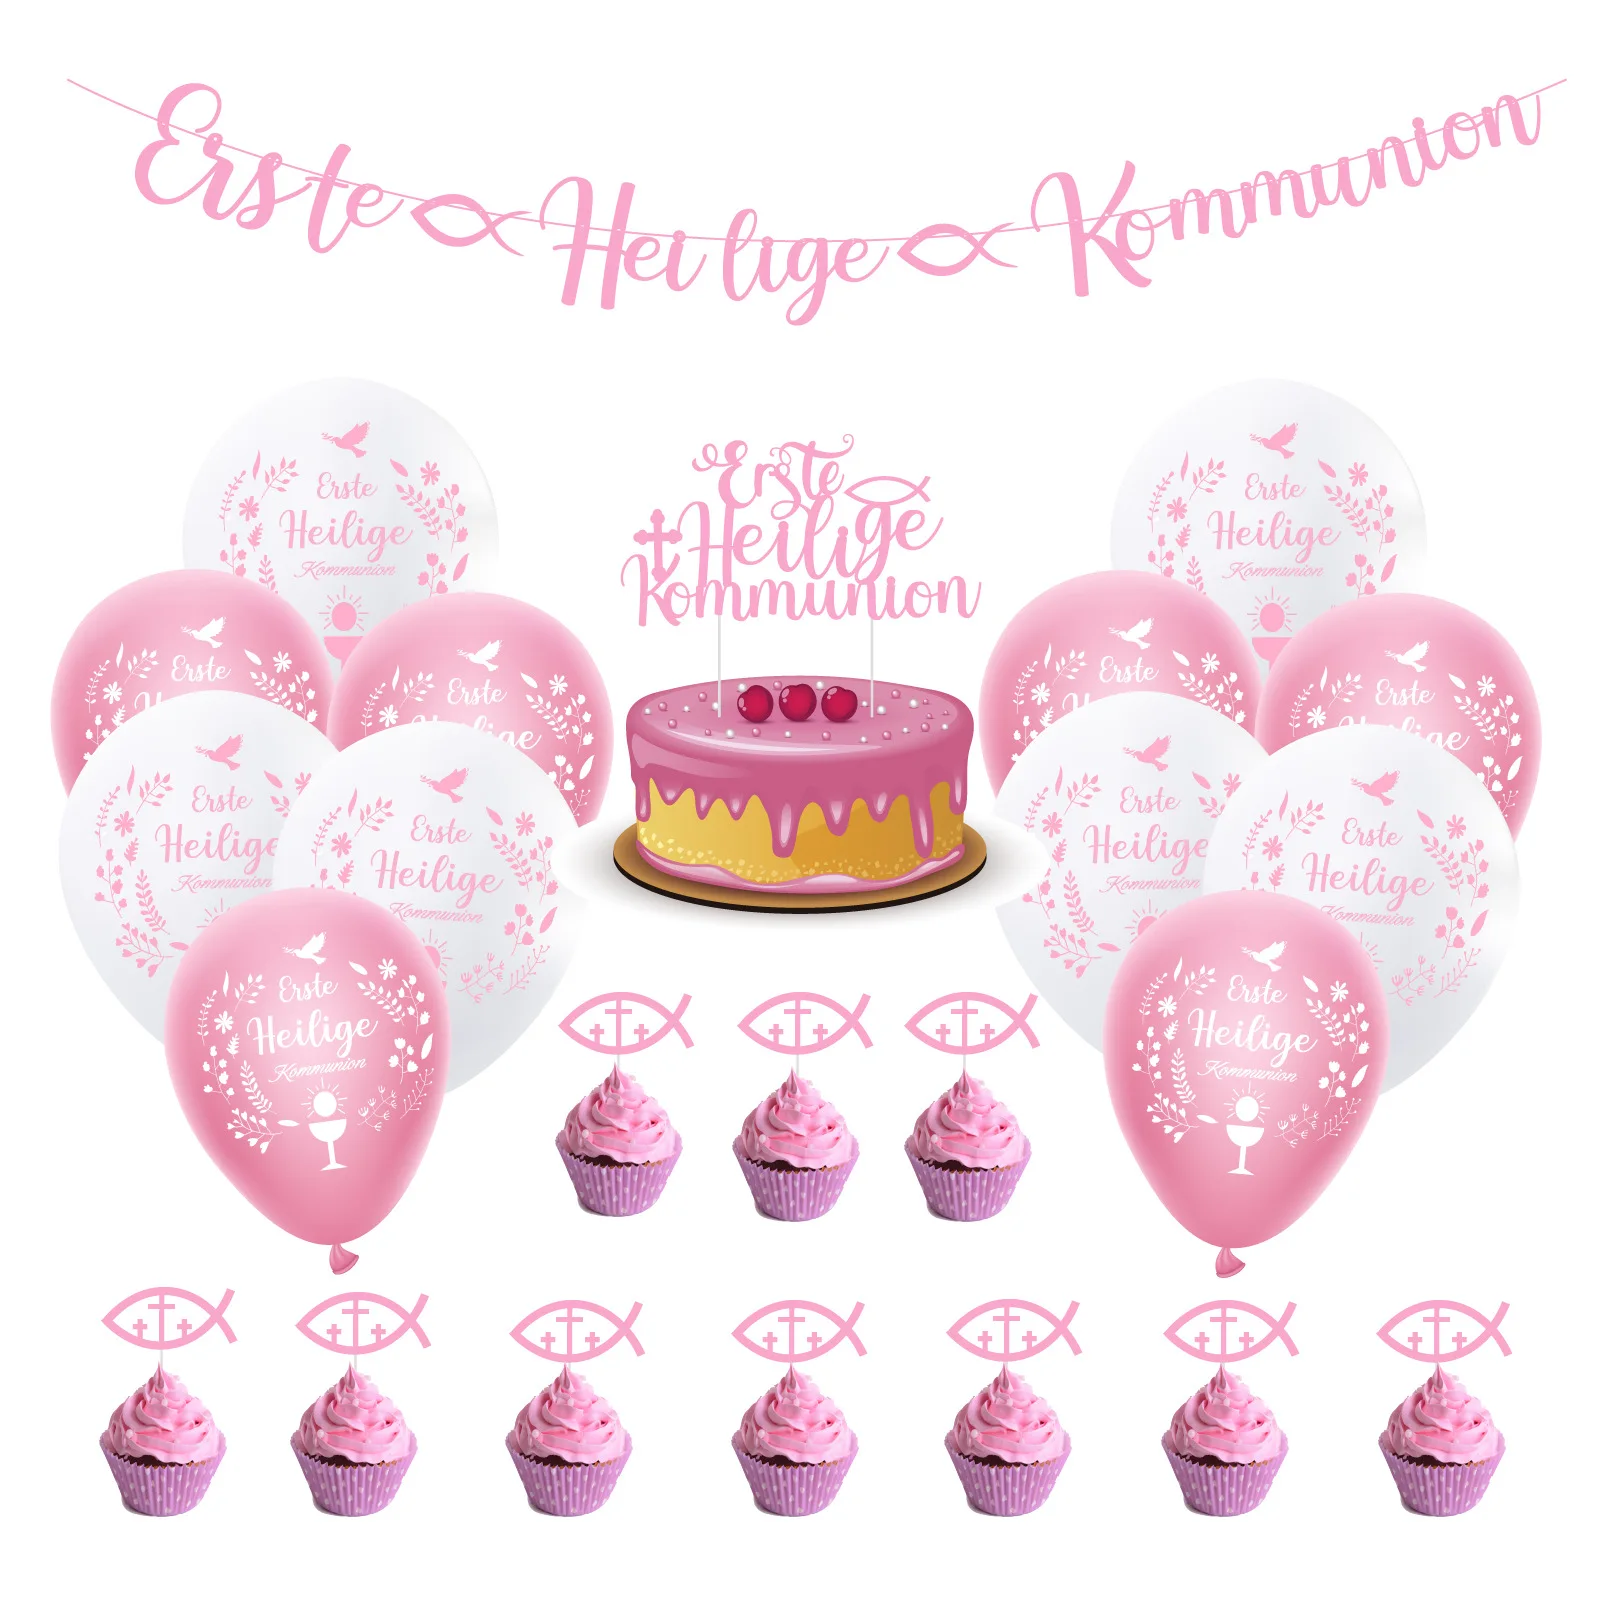 

JOYMEMO Erste Heilige Kommunion 1st Birthday Party Decoration Balloons Set Banner Cake Topper for Girl Birthday Party Supplies